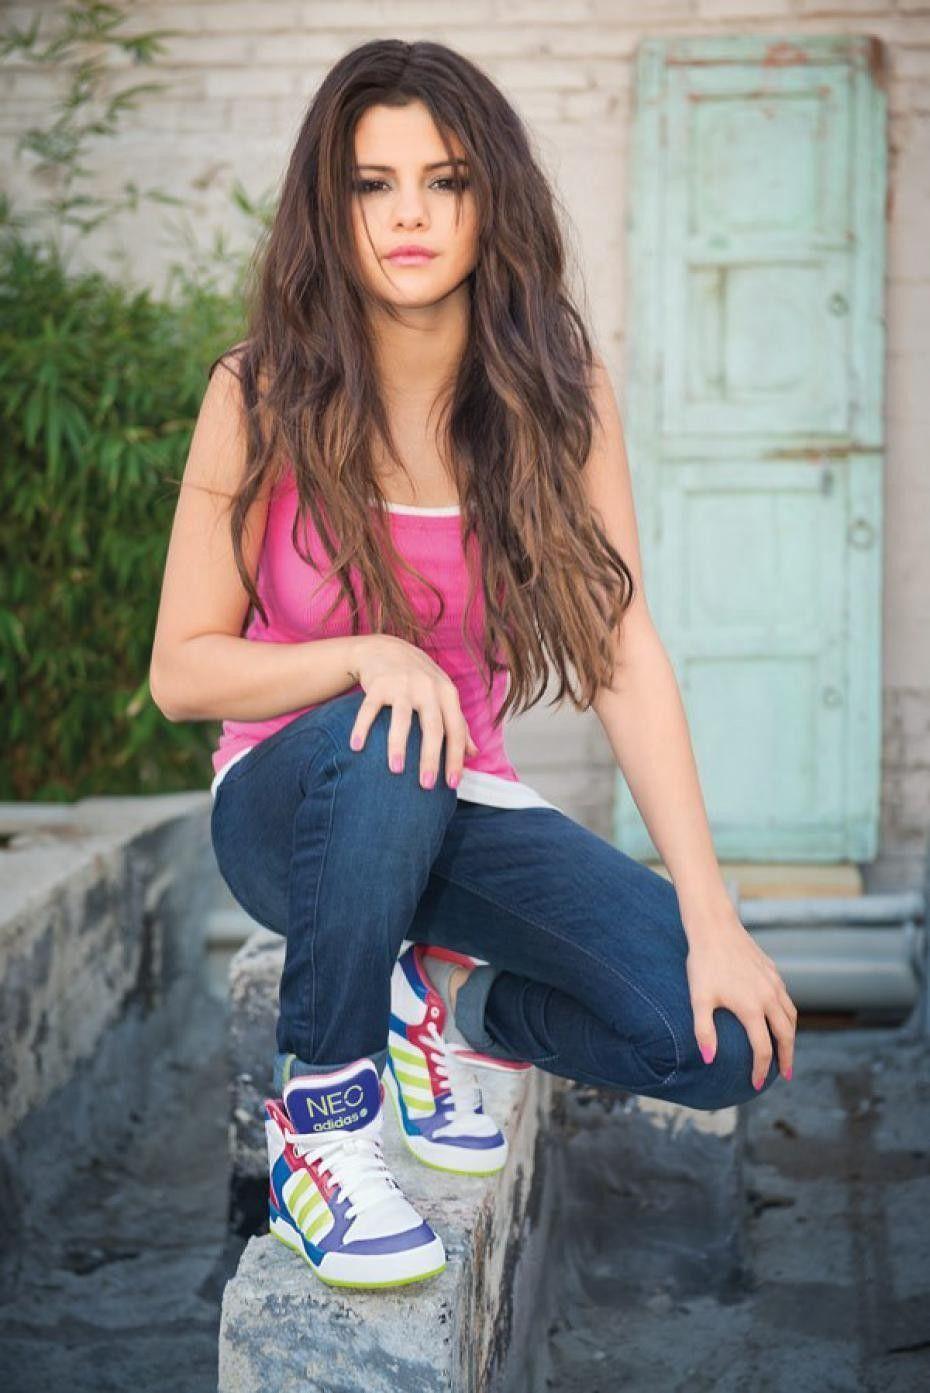 Latest Image of Selena Gomez. Download New Wallpaper HD